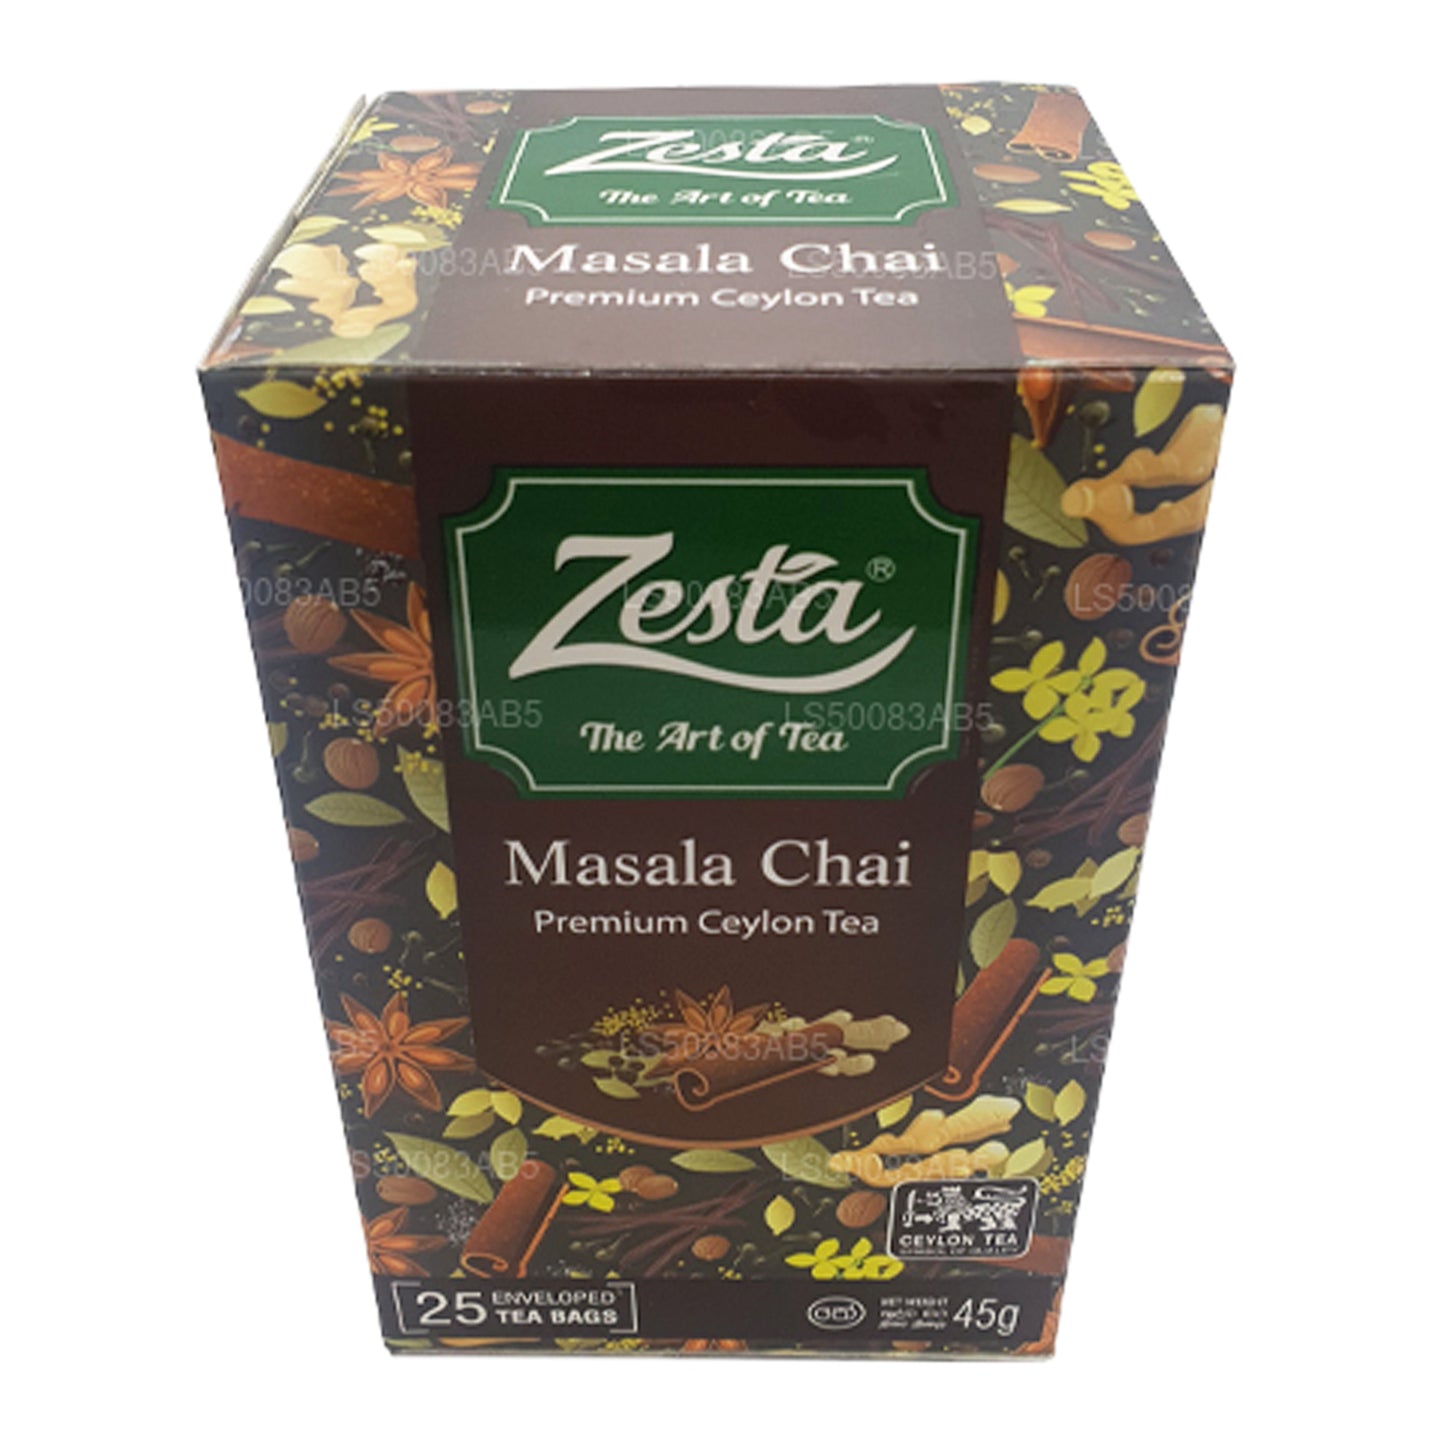 Zesta Masala Chai (45g) 25 个茶包